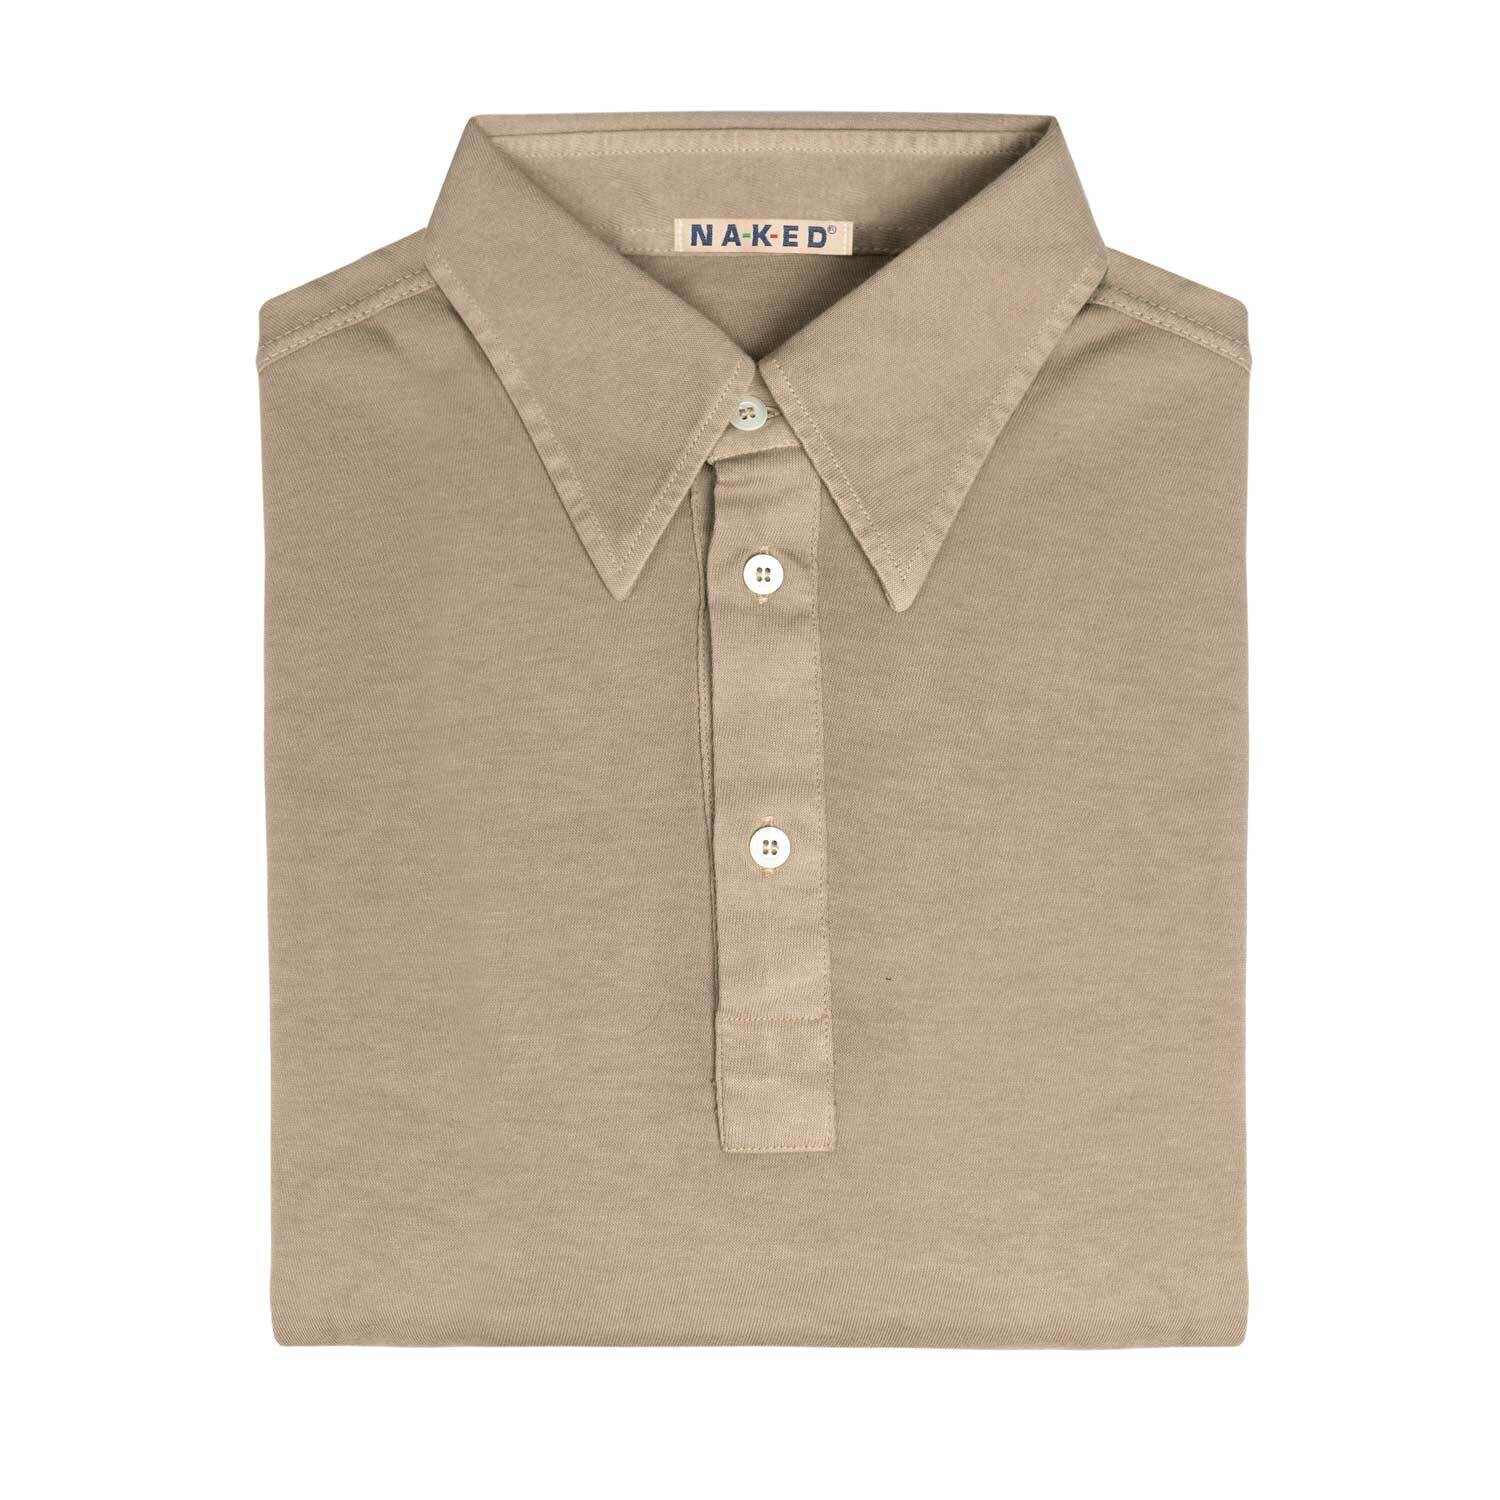 Dreamer Jersey cotton / cashmere Polo shirt